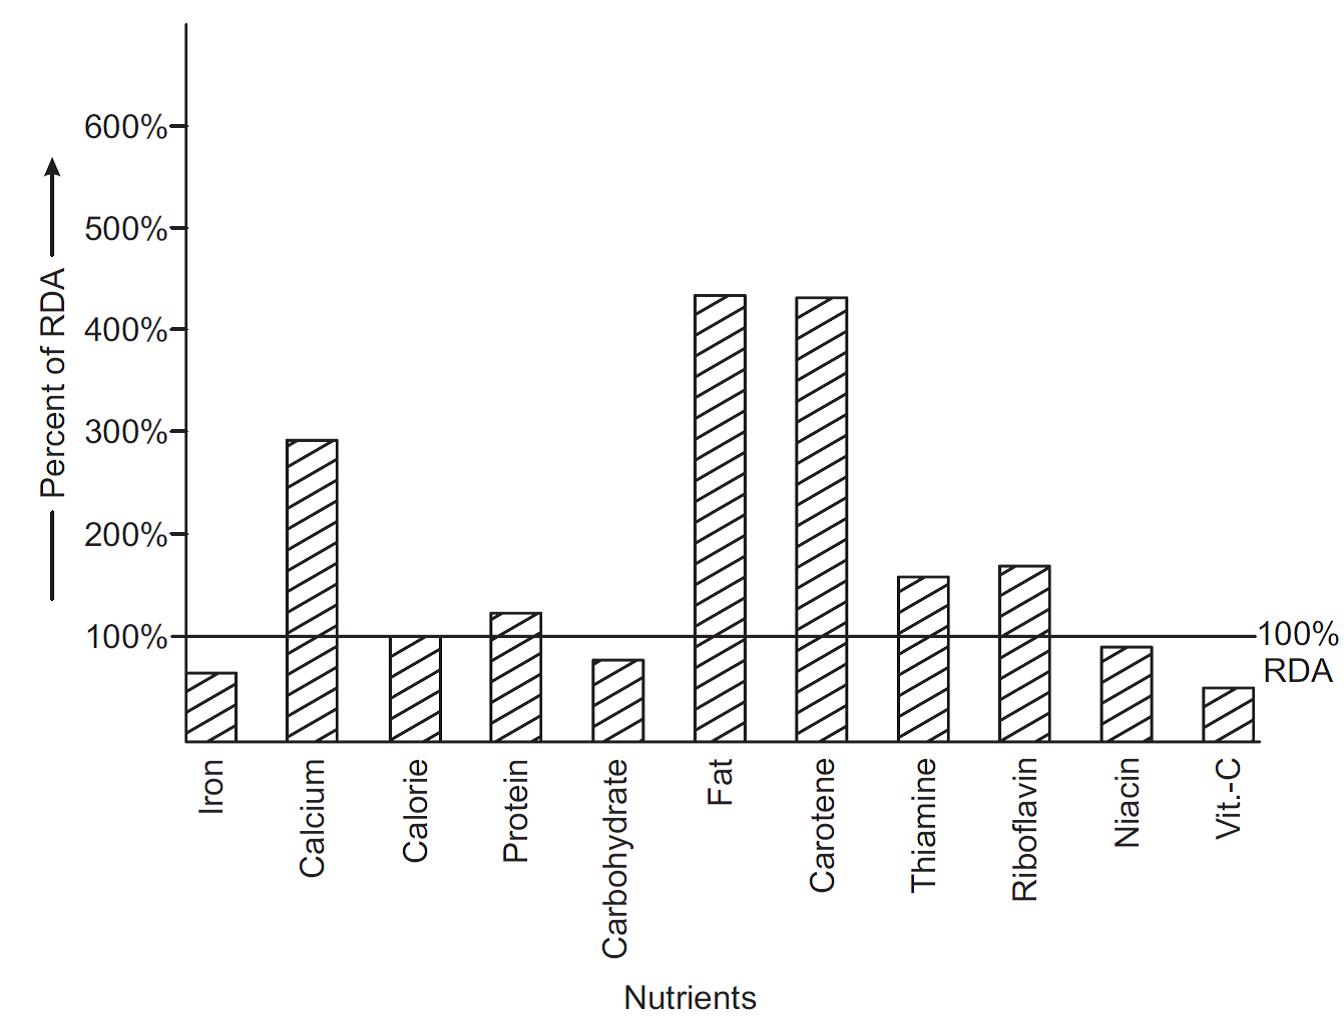 Figure showing Nutrient intake per capita as percent of RDA.